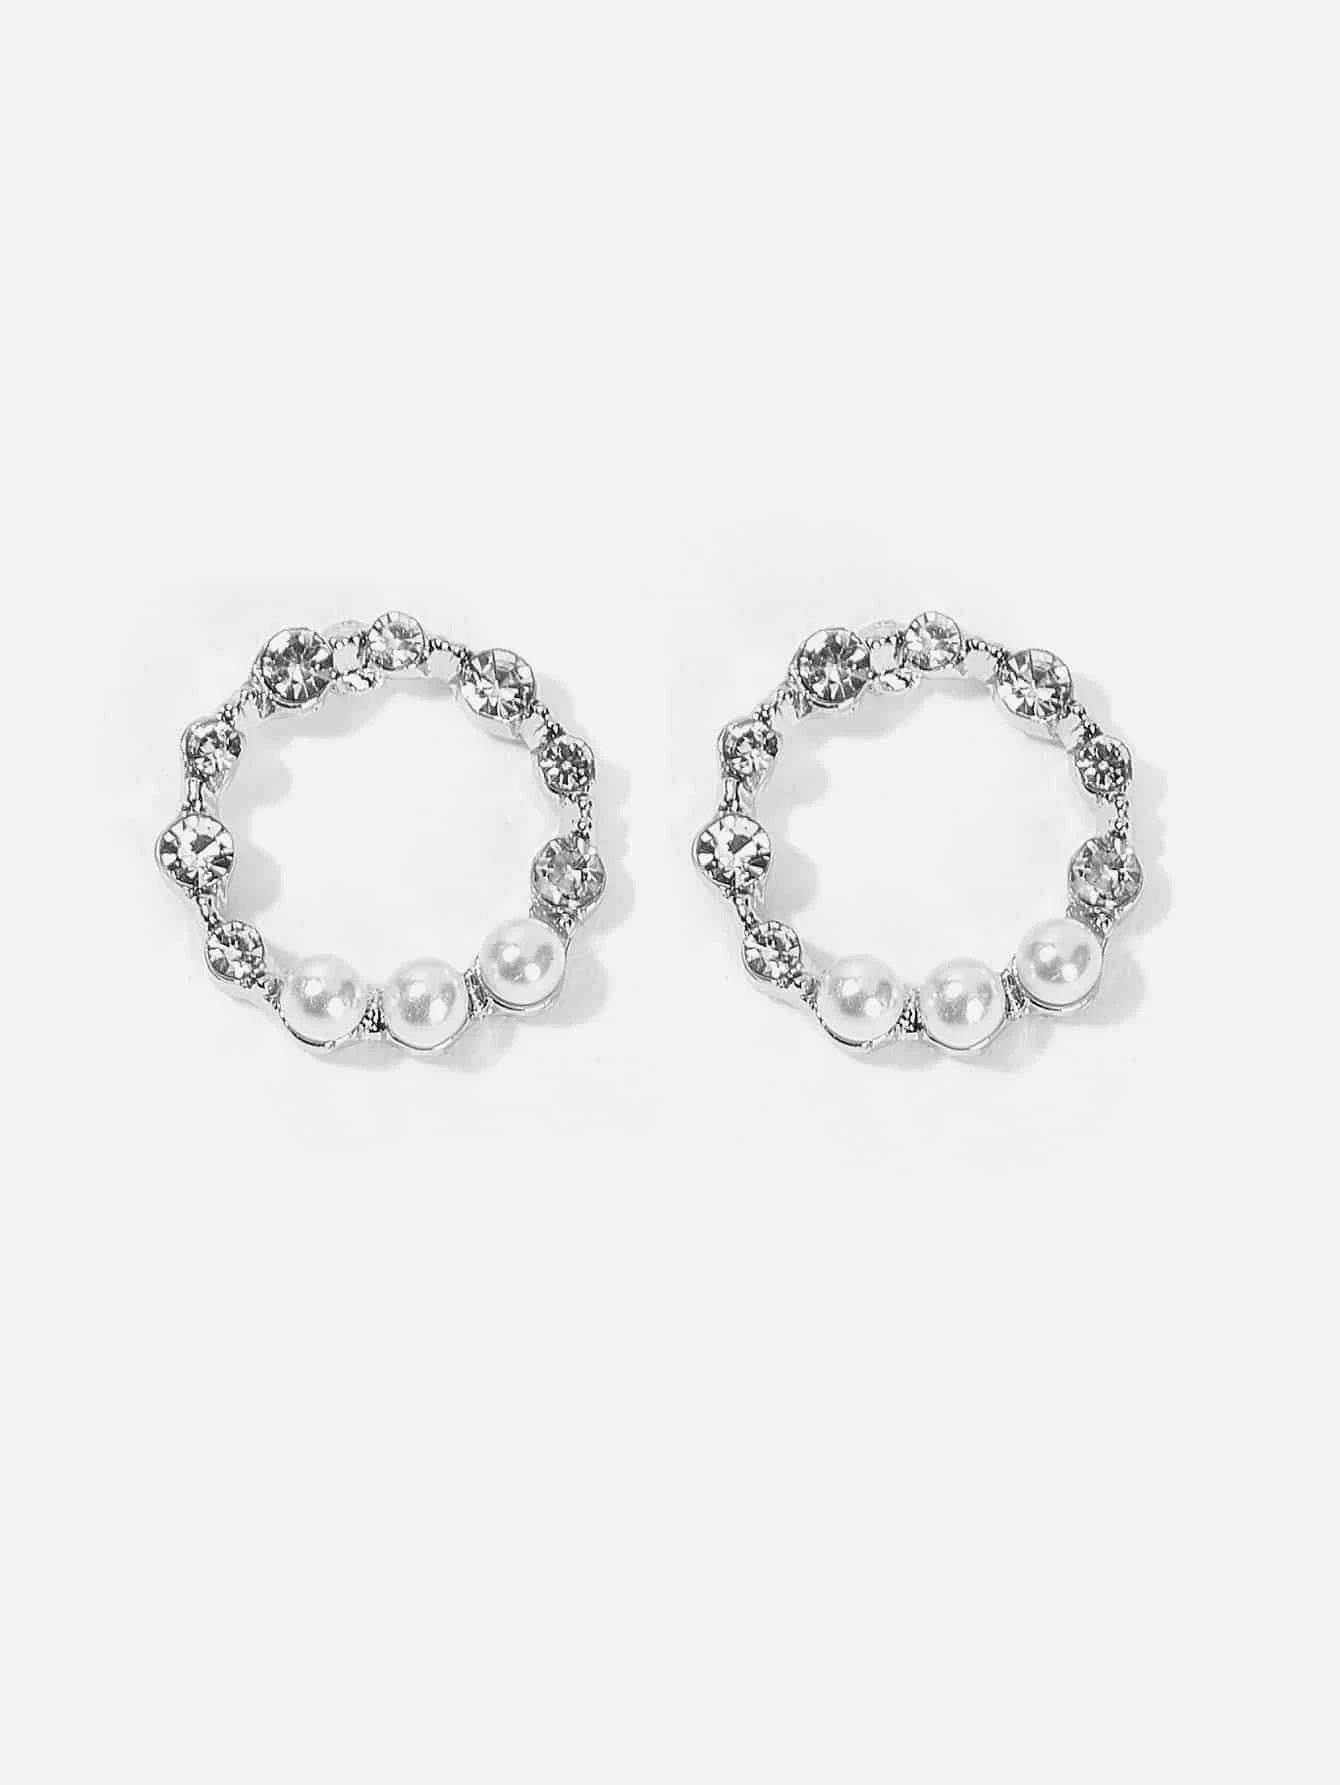 Rhinestone & Faux Pearl Circle Stud Earrings 1pair - HDJ 175